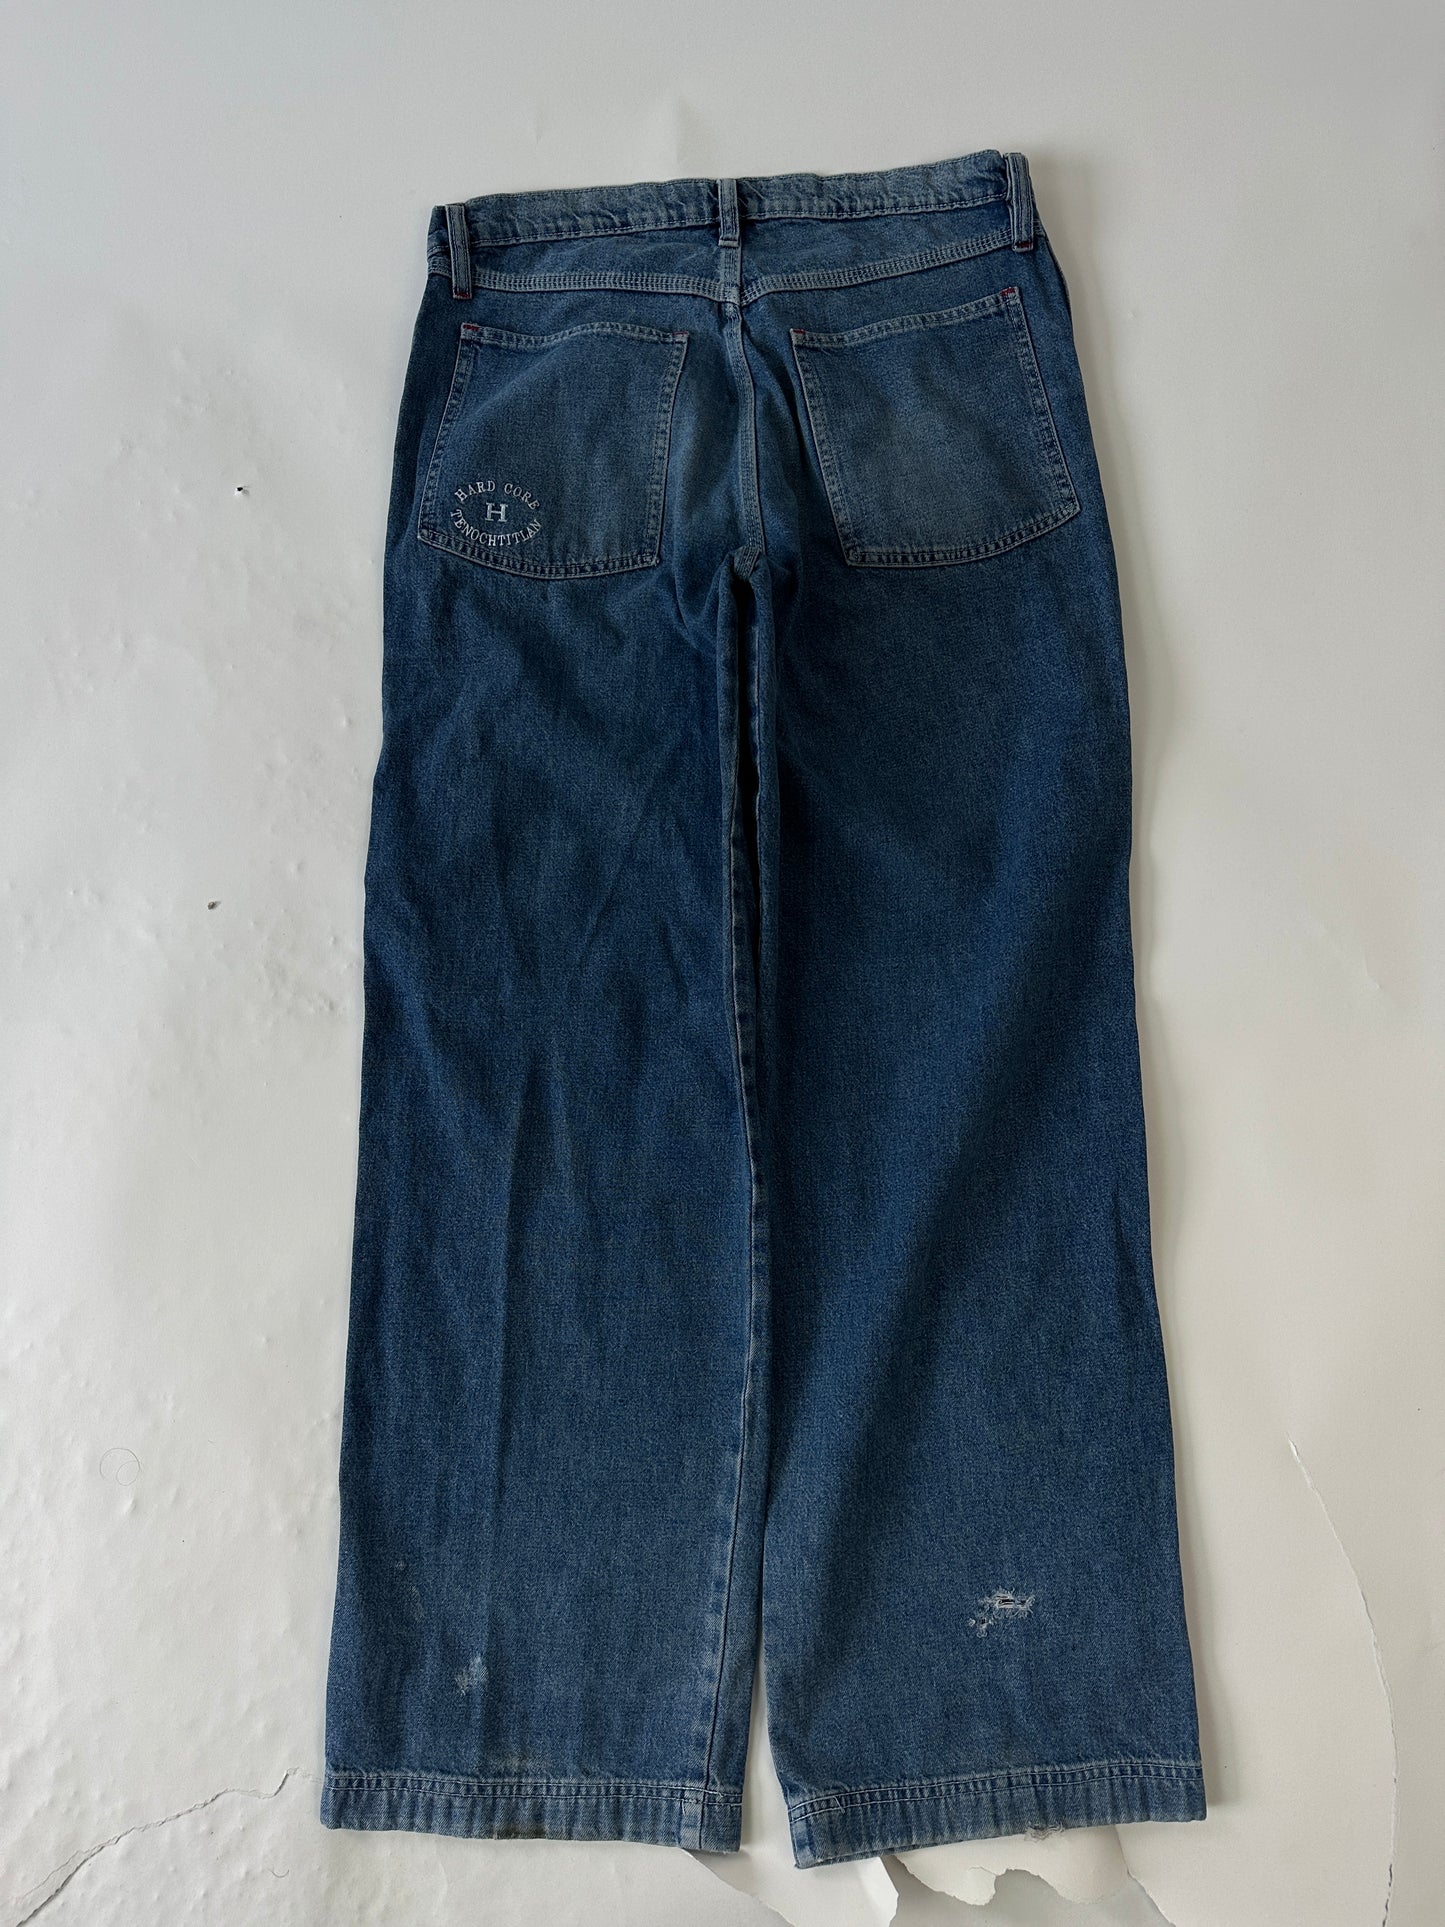 Hard Core Vintage Baggy Jeans - 34